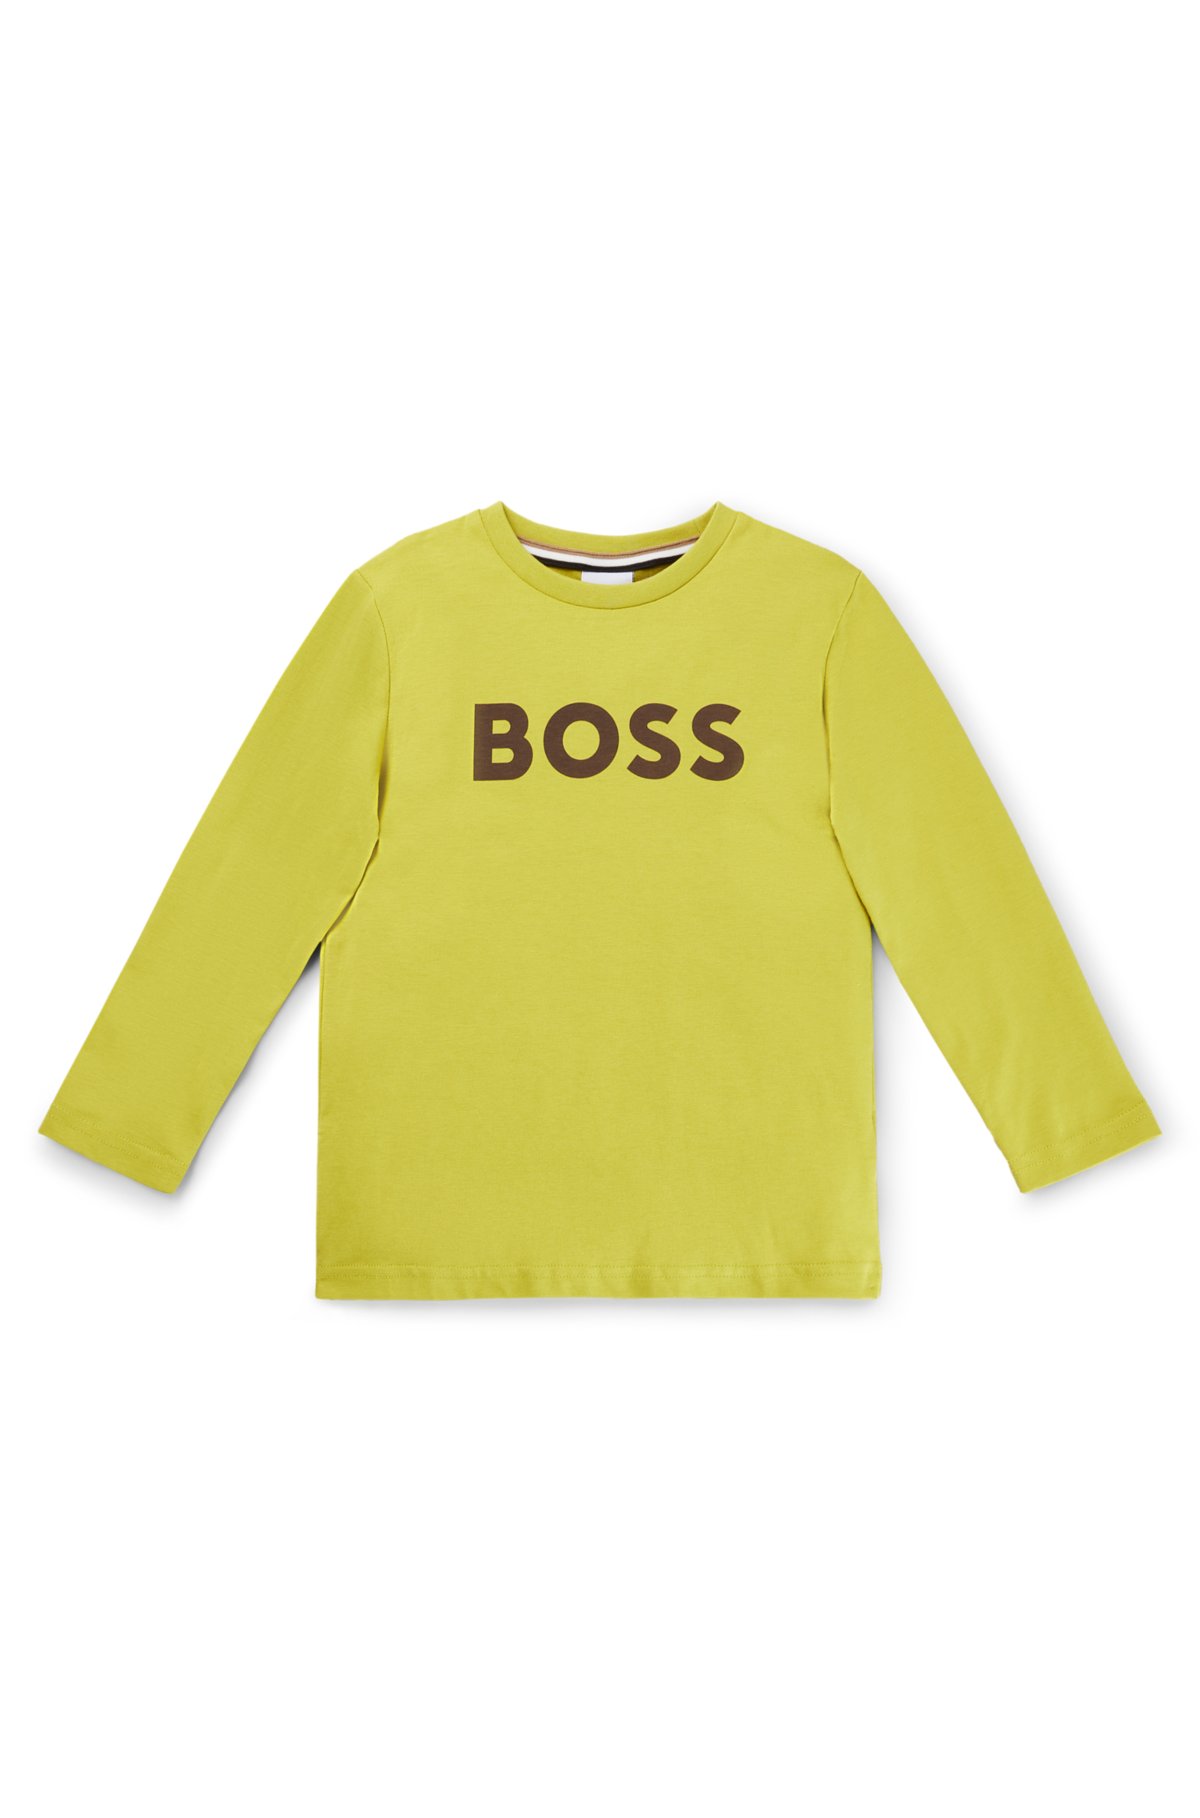 Camiseta de manga larga en algodón amarilla para niño